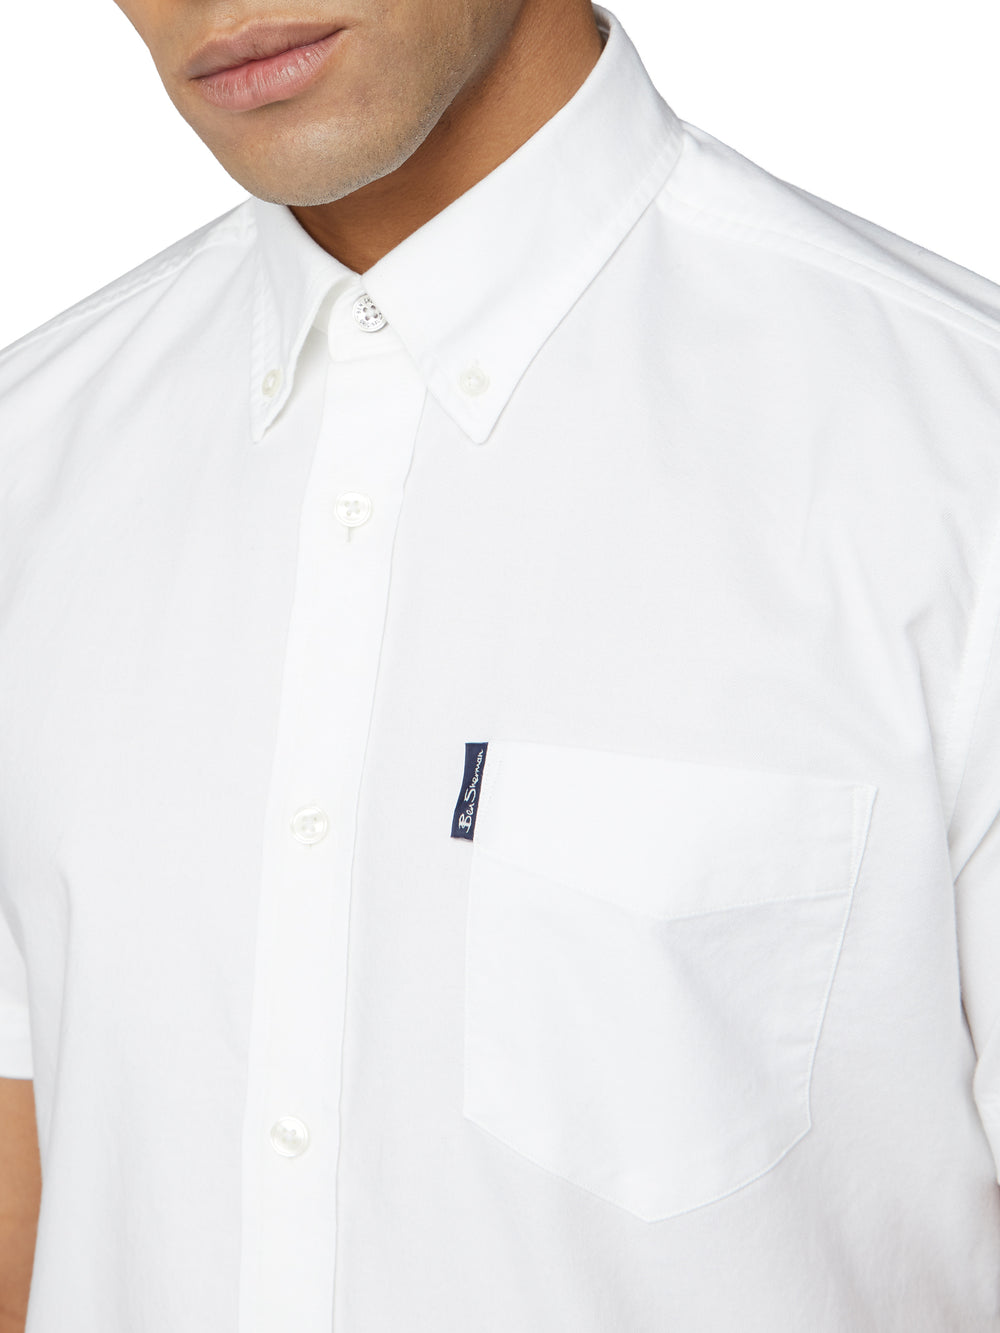 Short-Sleeve Signature Oxford Shirt - White